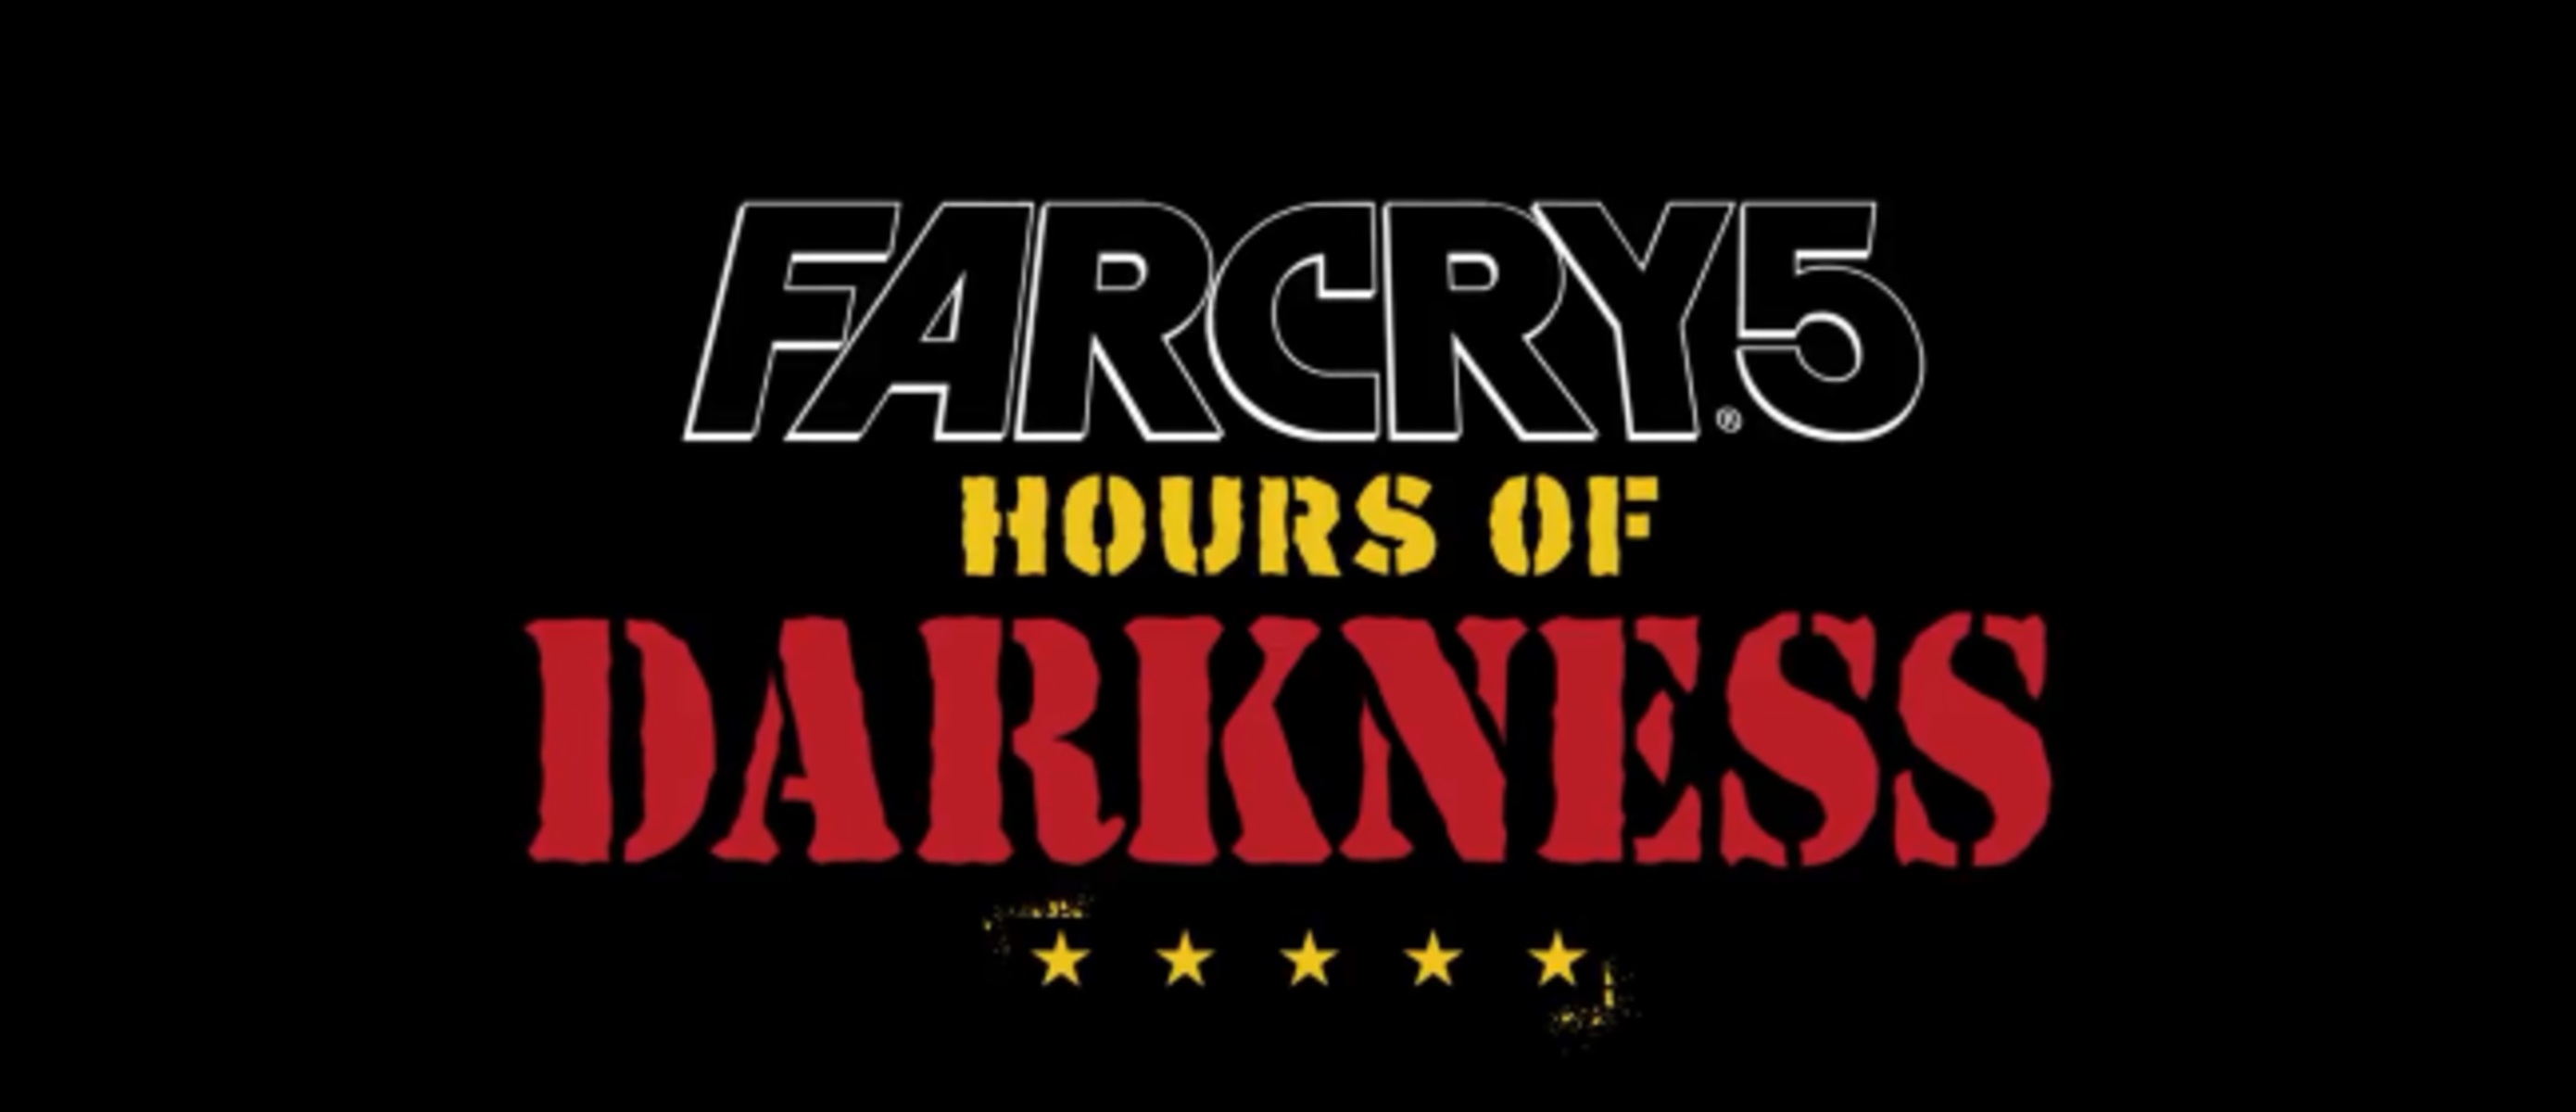 Dark far. Hour of Darkness. Фар край 5 темное время. Логотип far Cry 5 темное время. Far о времени.